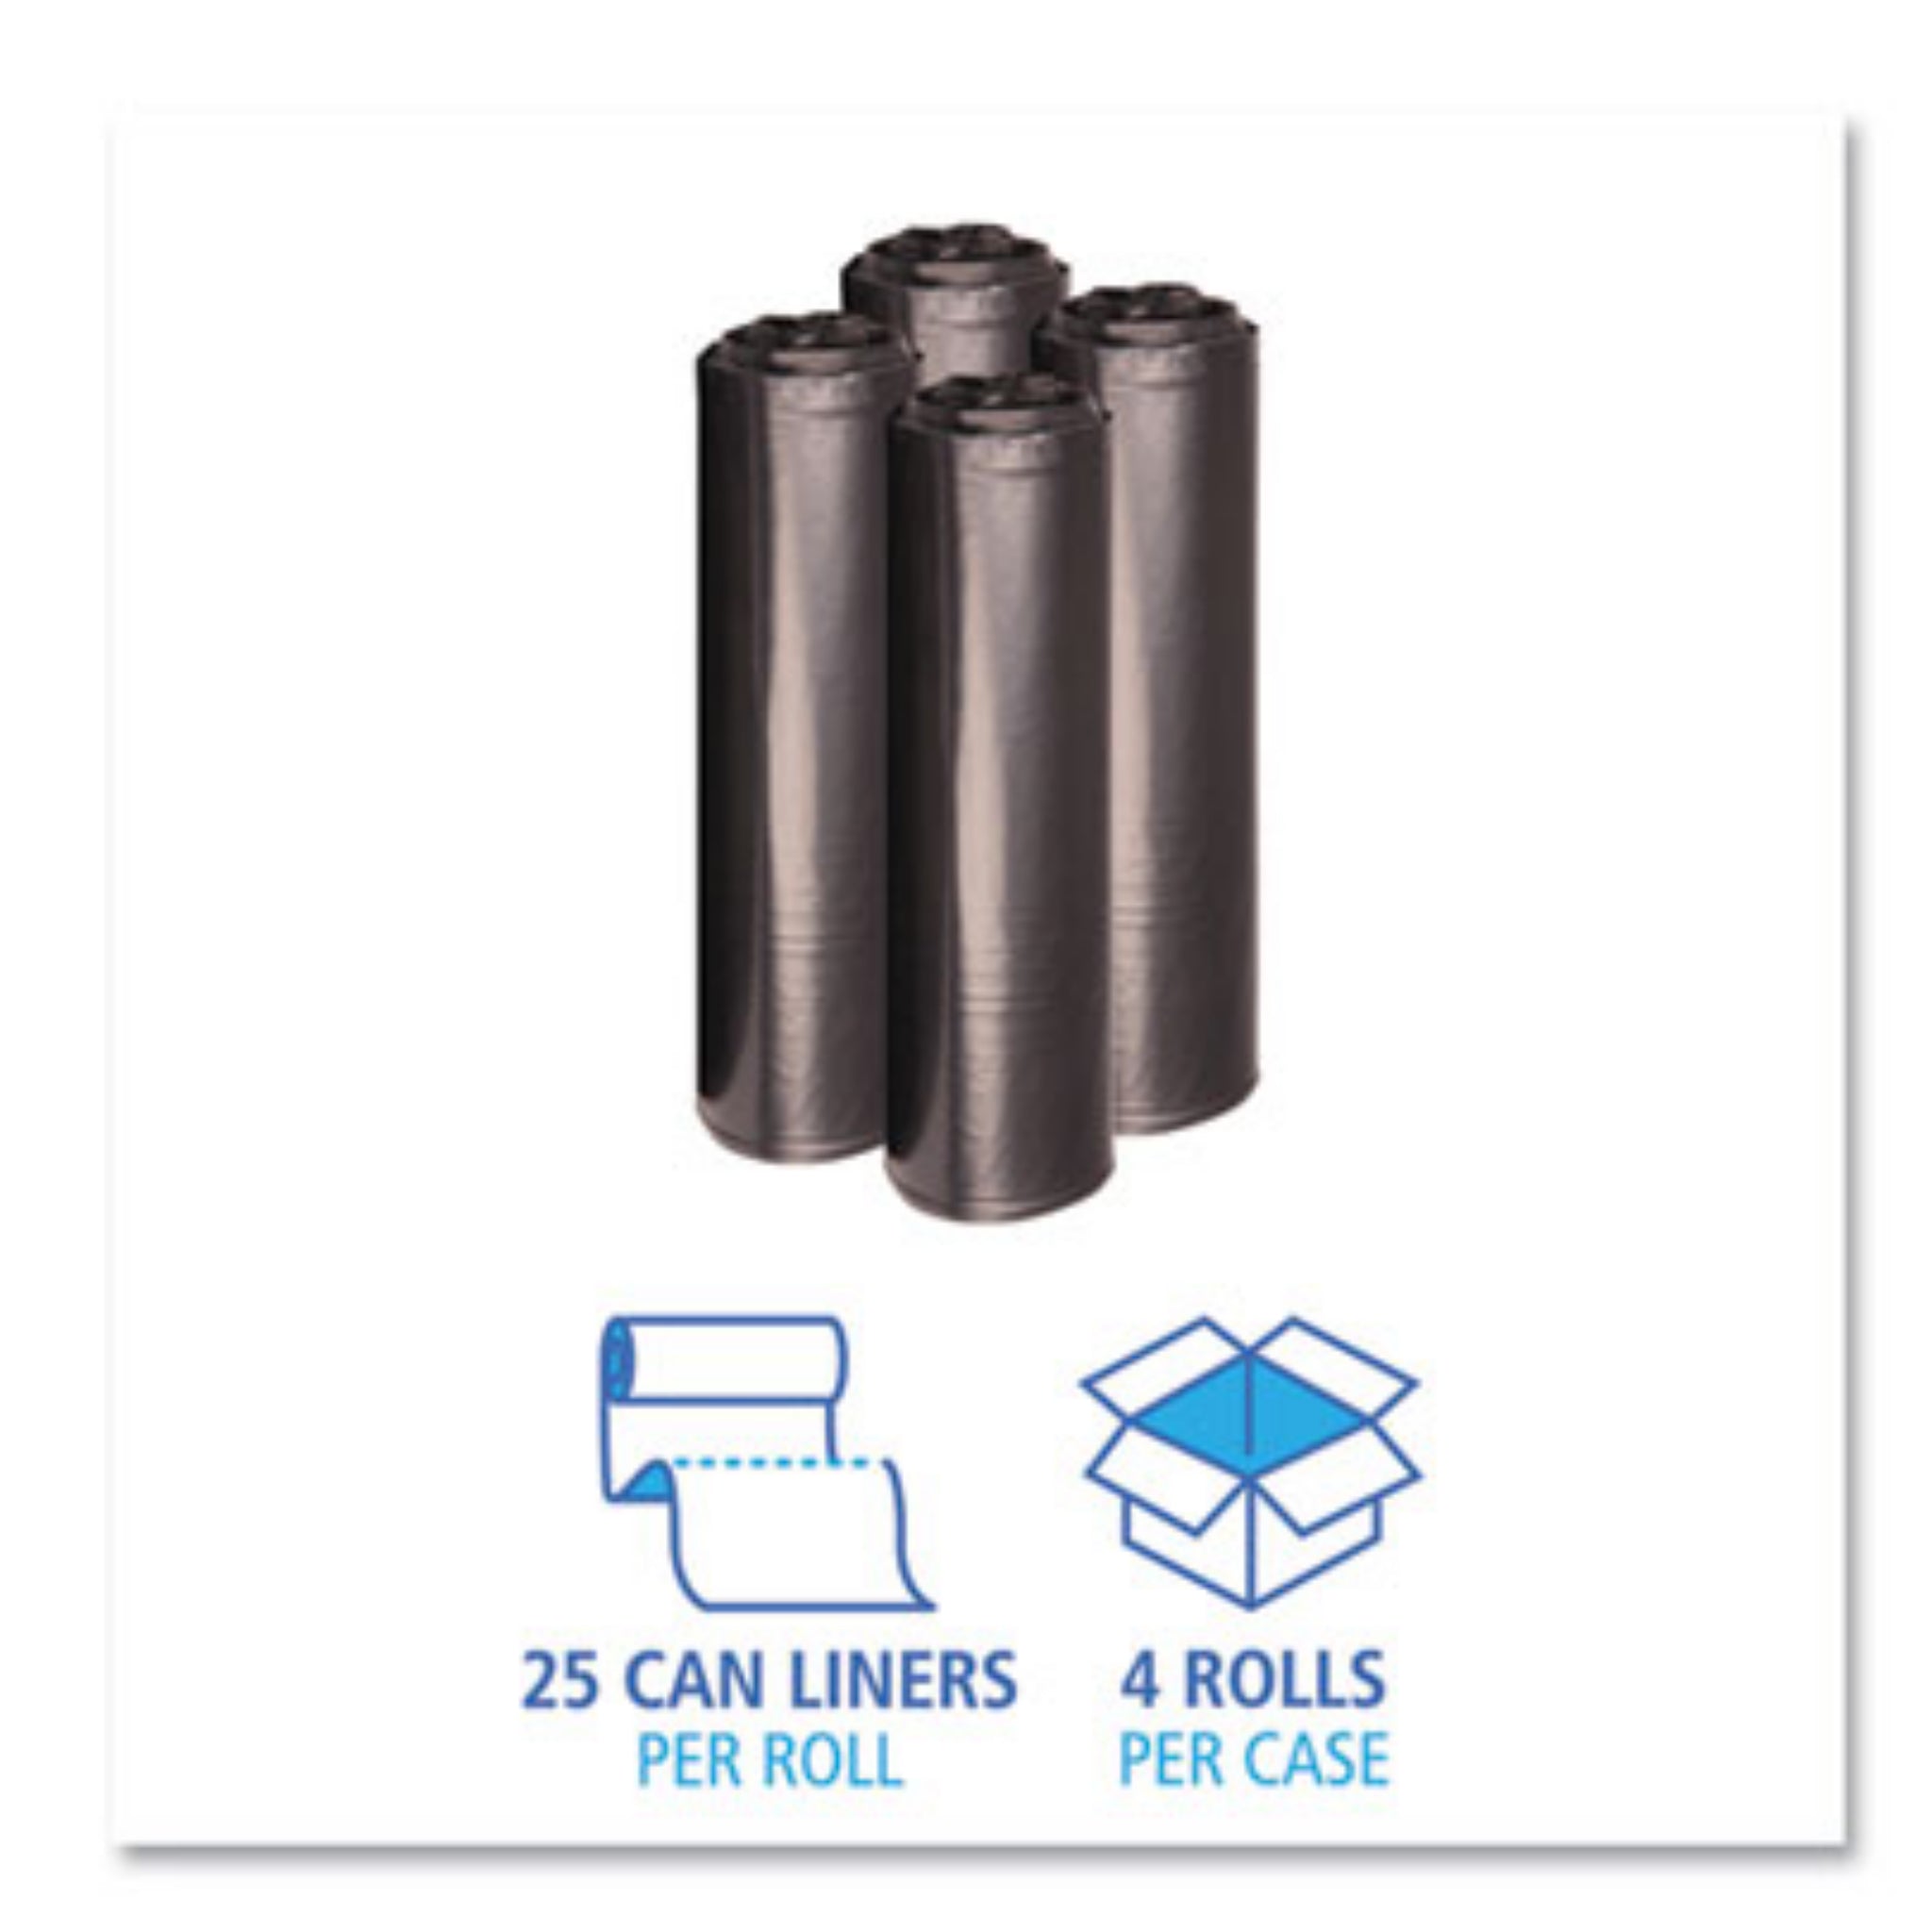 BOARDWALK BWK516 Recycled Low-Density Polyethylene Can Liners, 4 Rolls